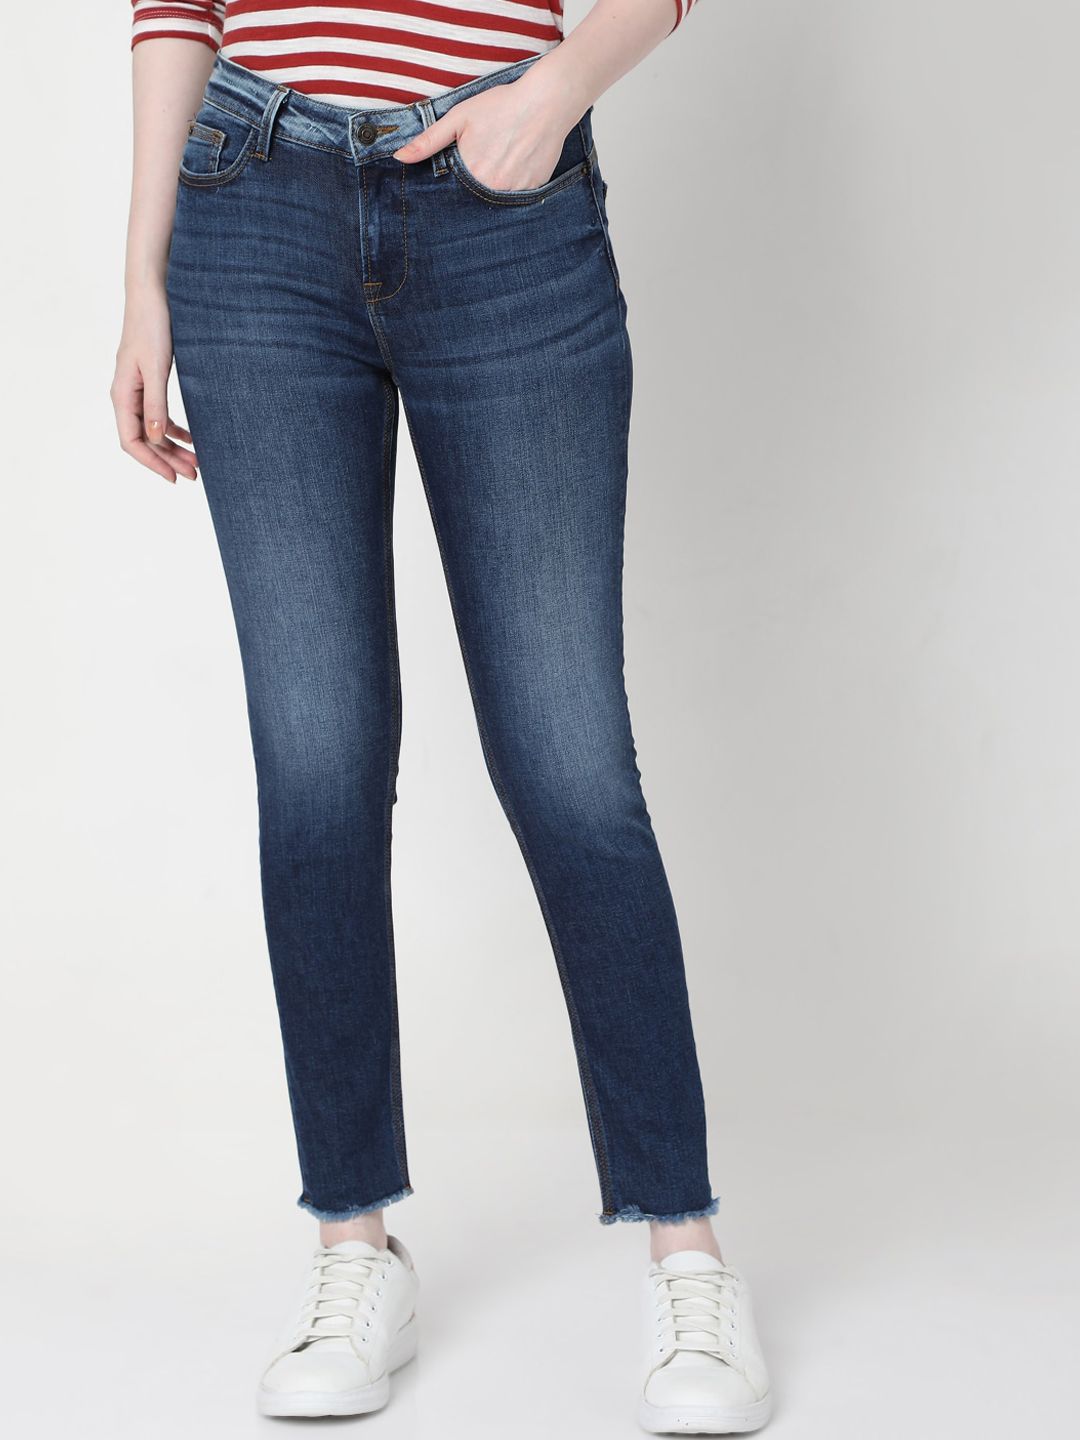 Vero Moda Women Blue Skinny Fit Light Fade Jeans Price in India